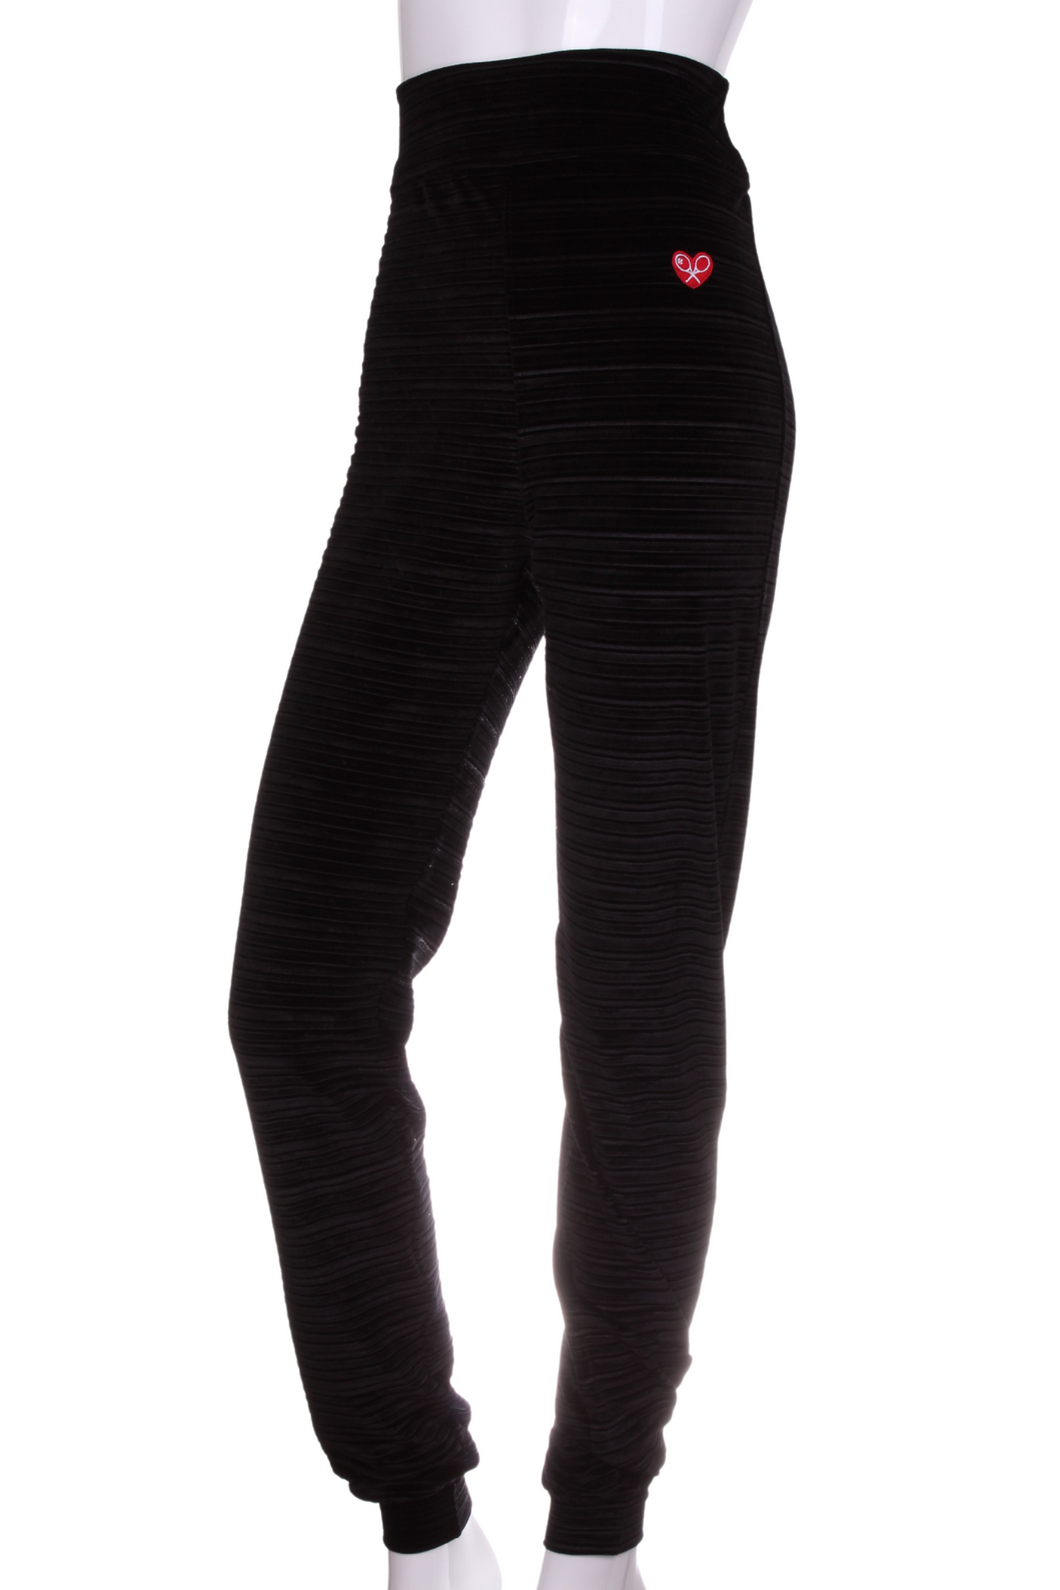 Striped Black Velvet High + Long Warm Up Pants - I LOVE MY DOUBLES PARTNER!!!